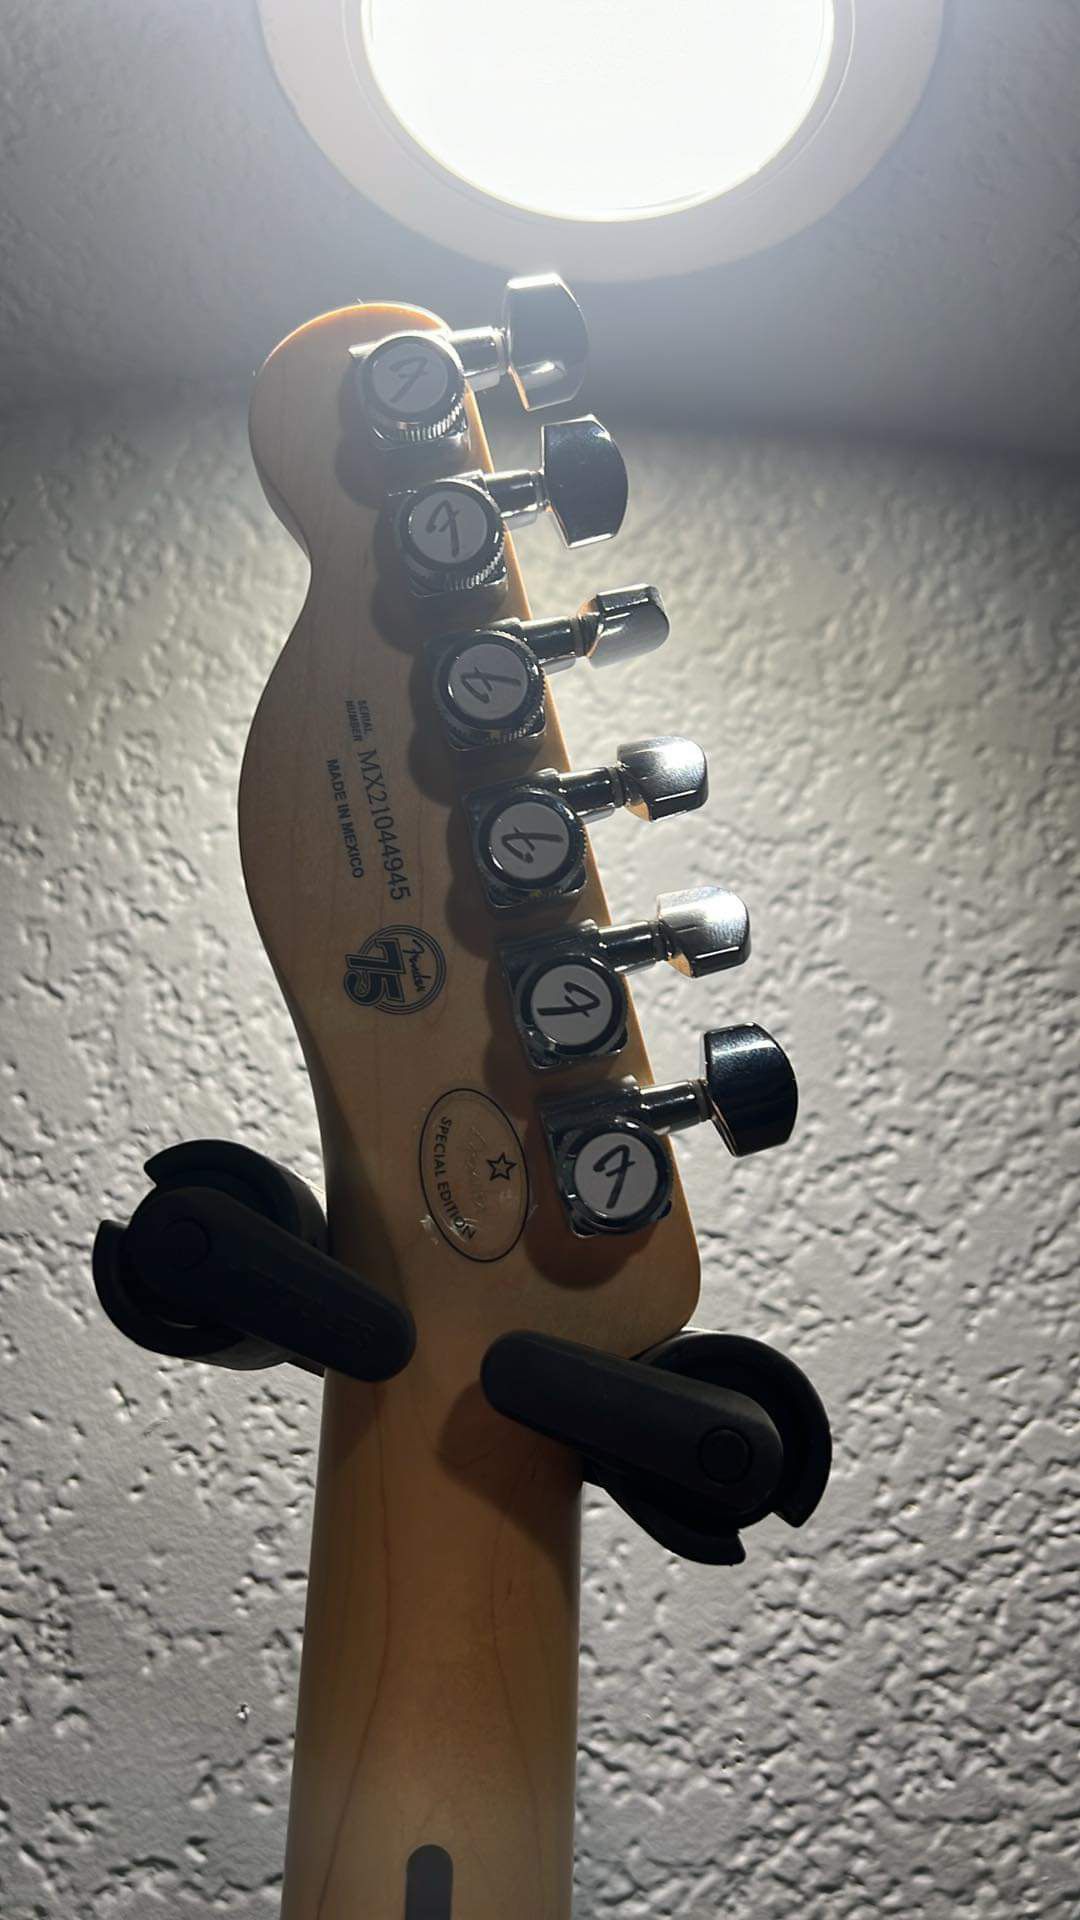 Fender Players Telecaster 